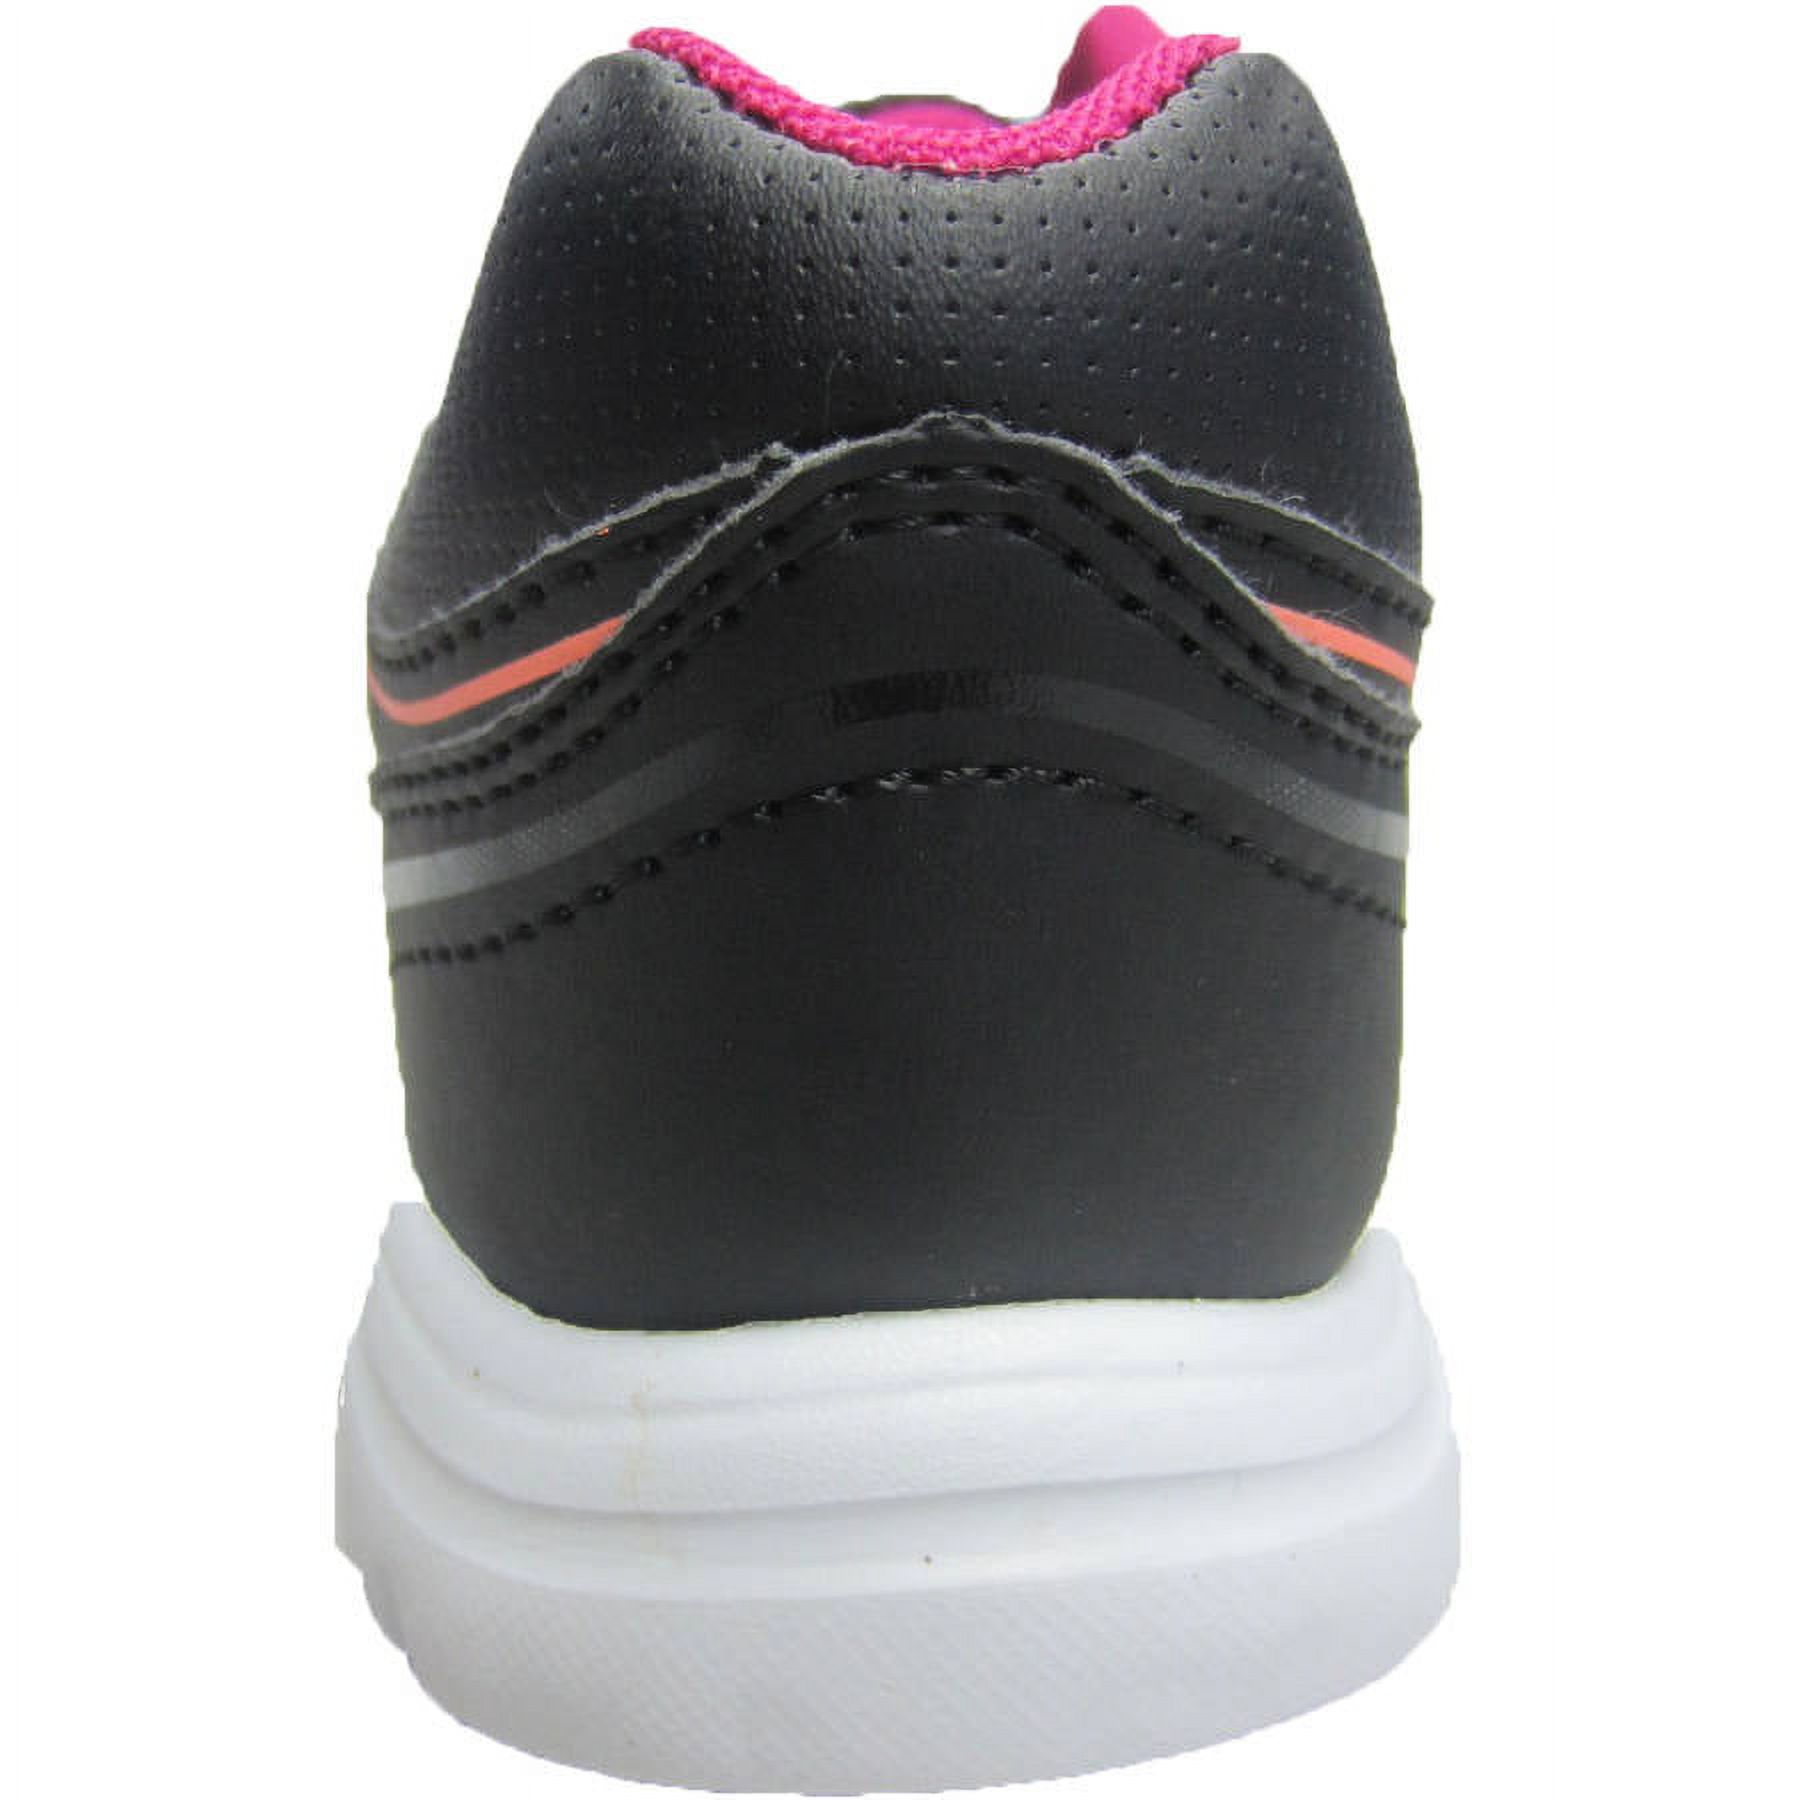 Women's Athletic Shoe - image 3 of 4